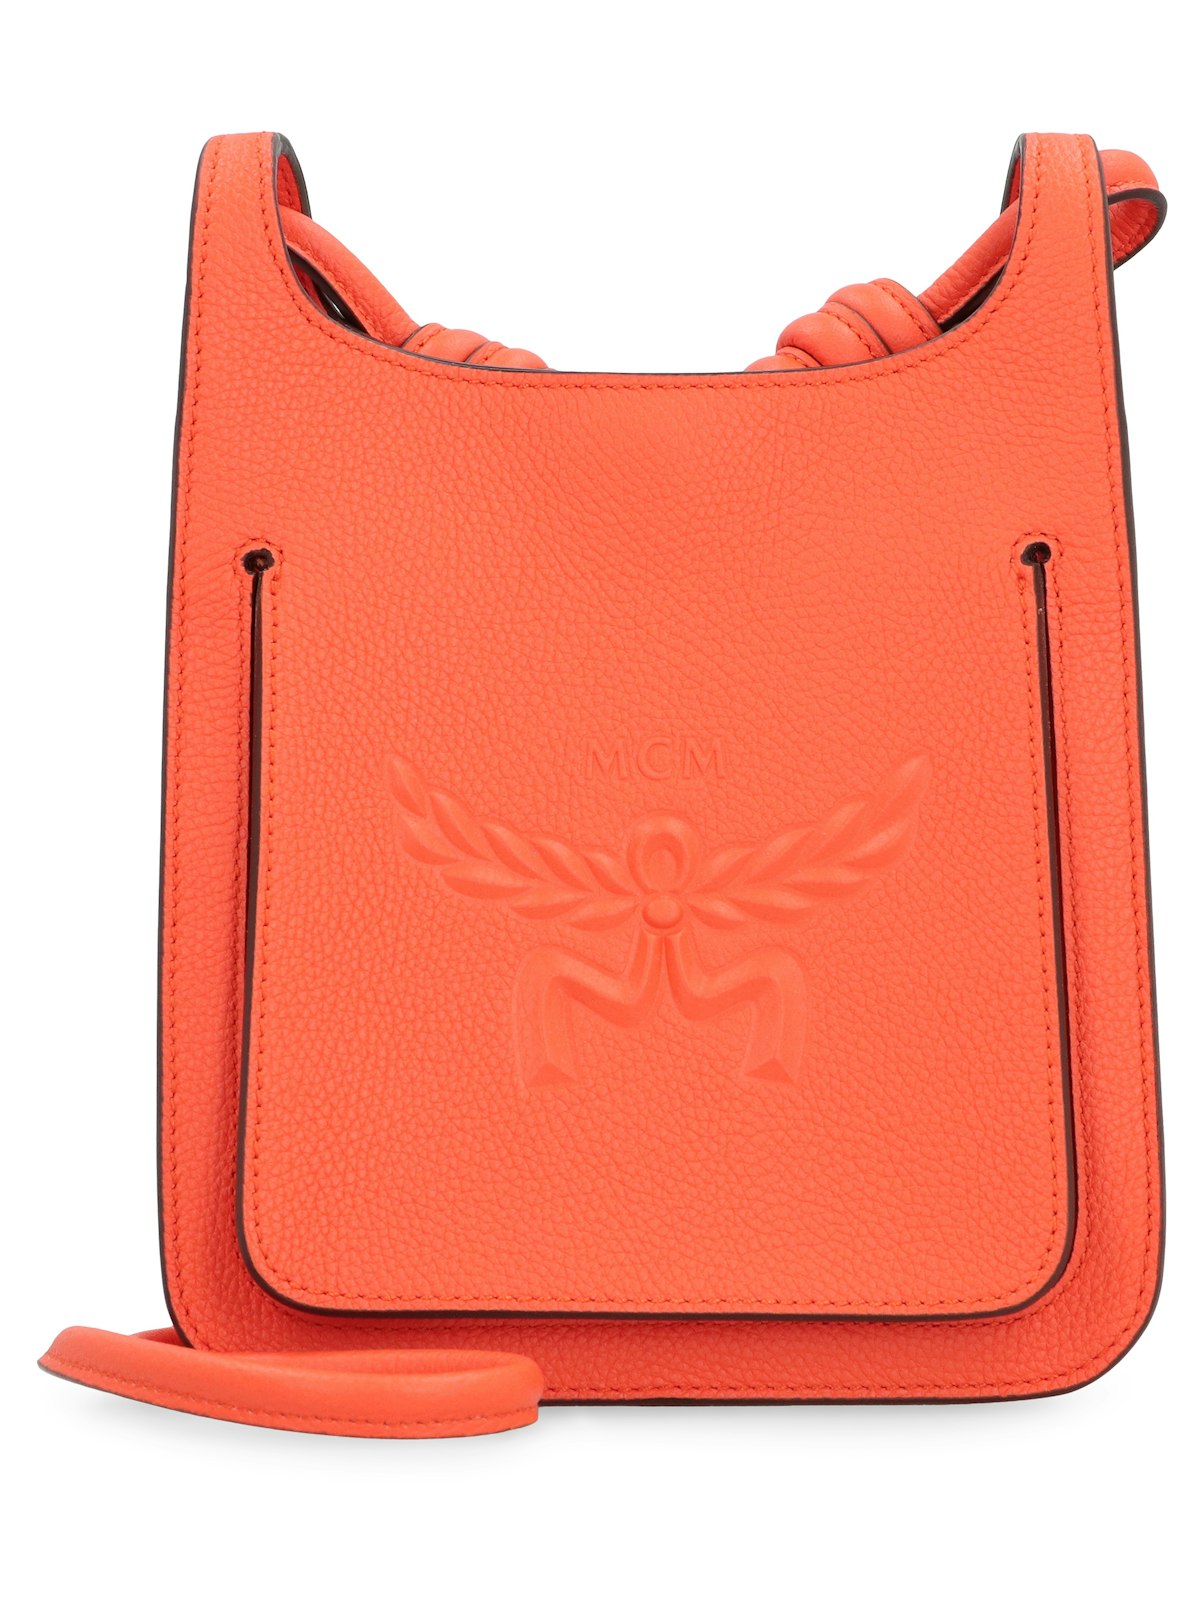 Shop Mcm Women's Himmel Mini Leather Hobo Bag In Orange